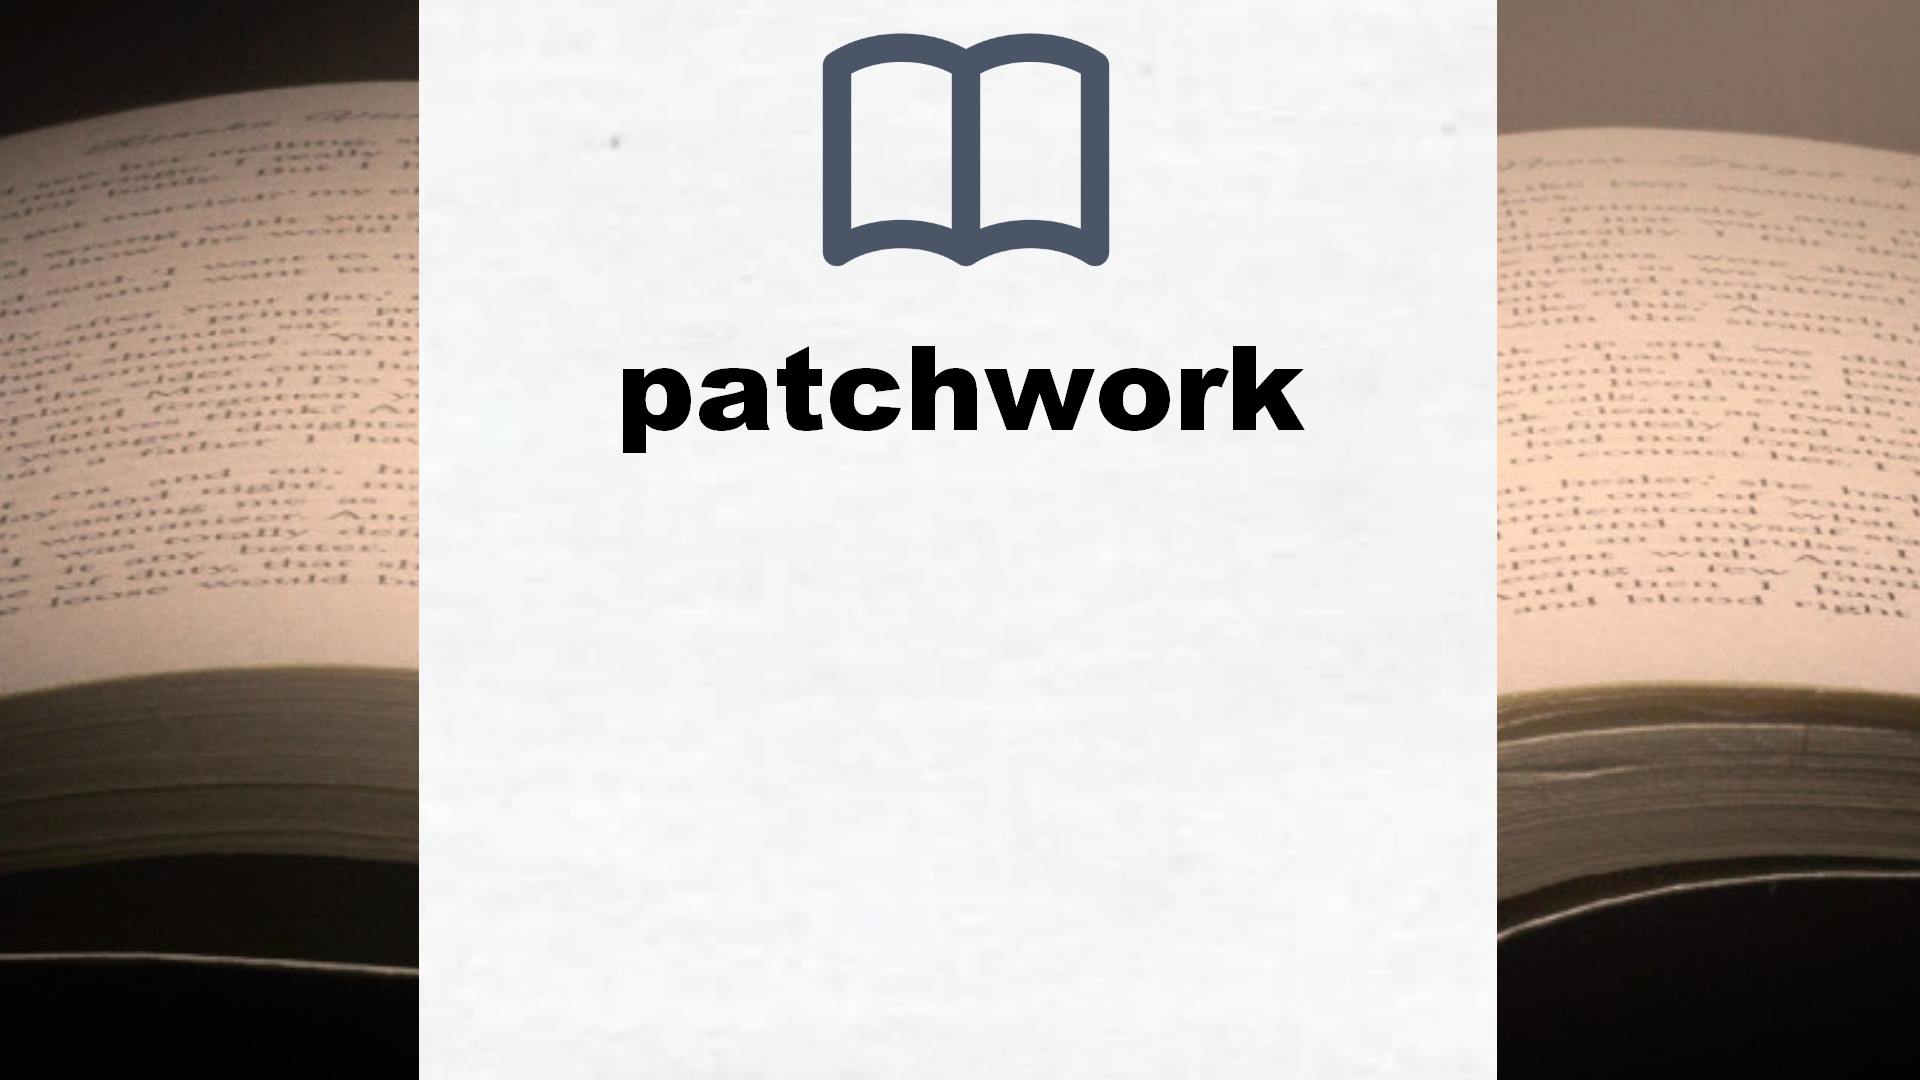 Libros sobre patchwork